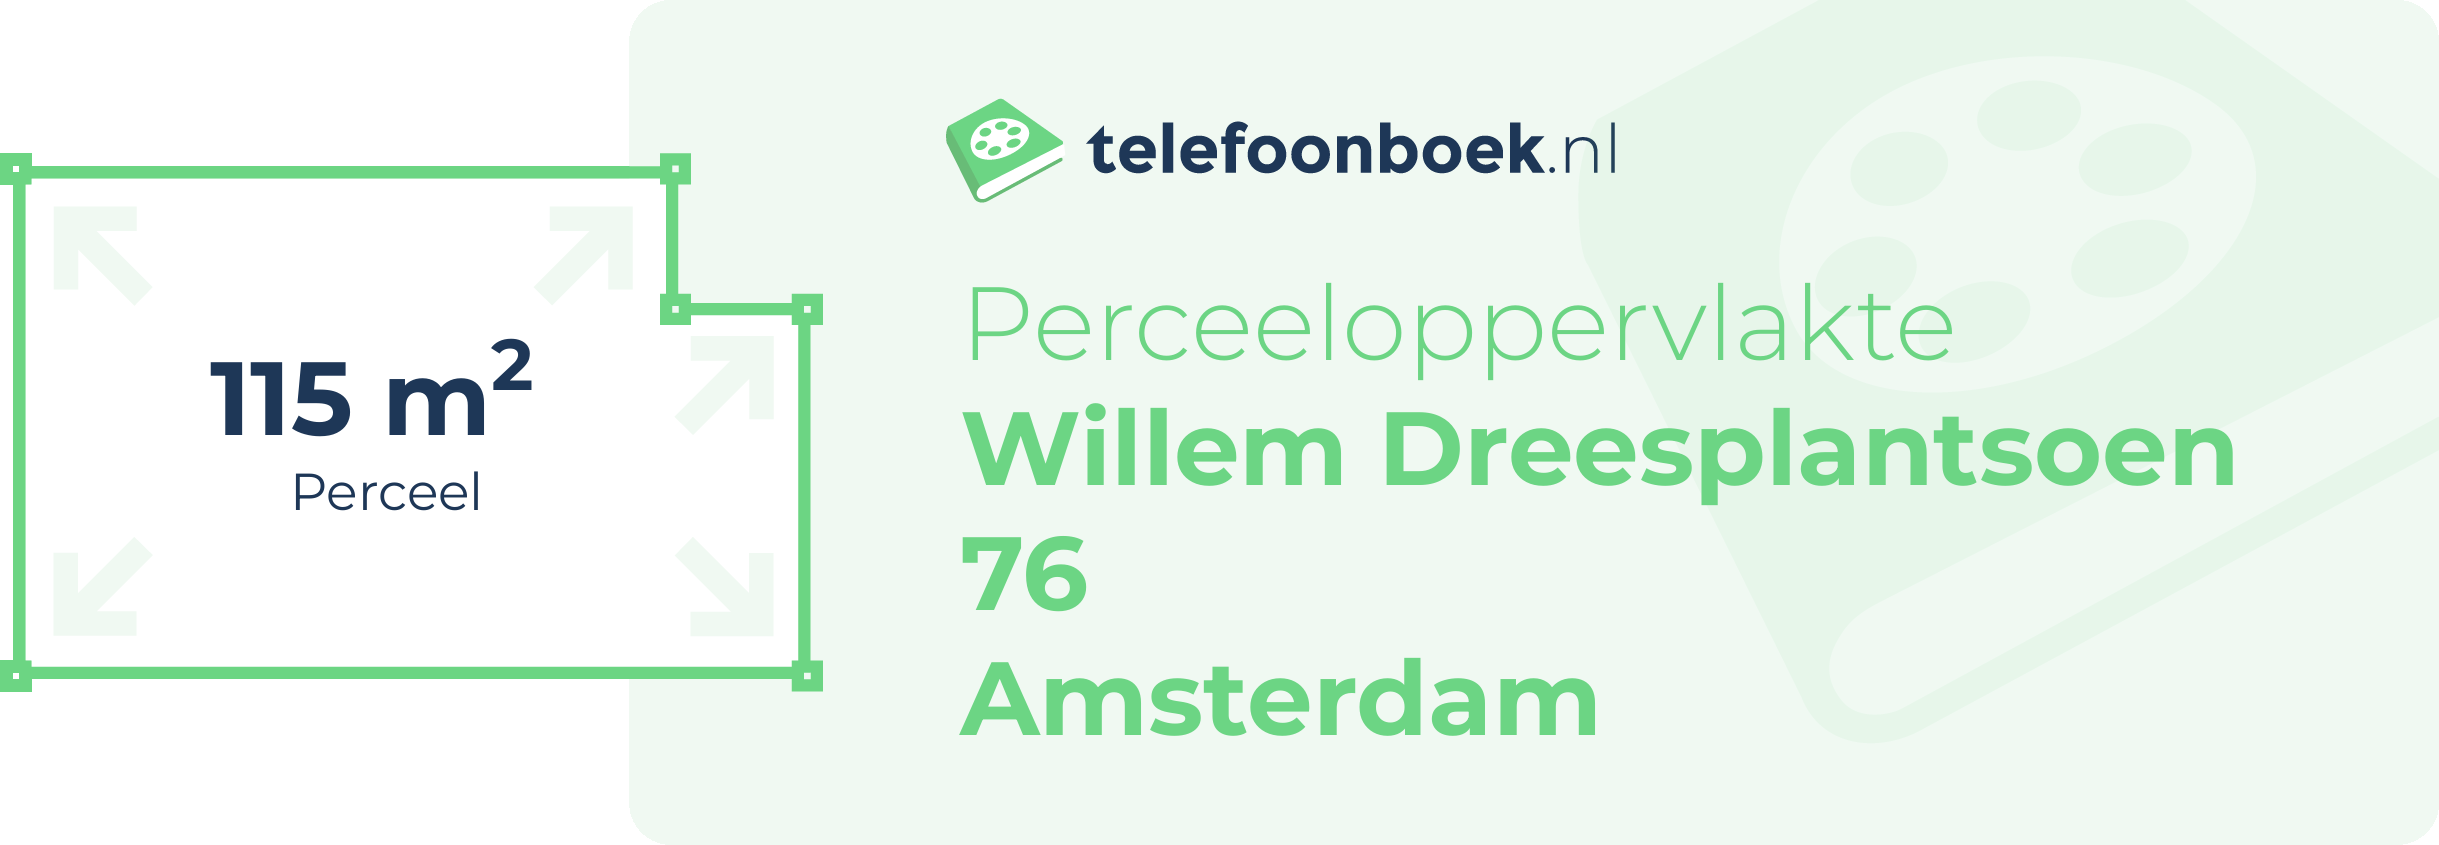 Perceeloppervlakte Willem Dreesplantsoen 76 Amsterdam